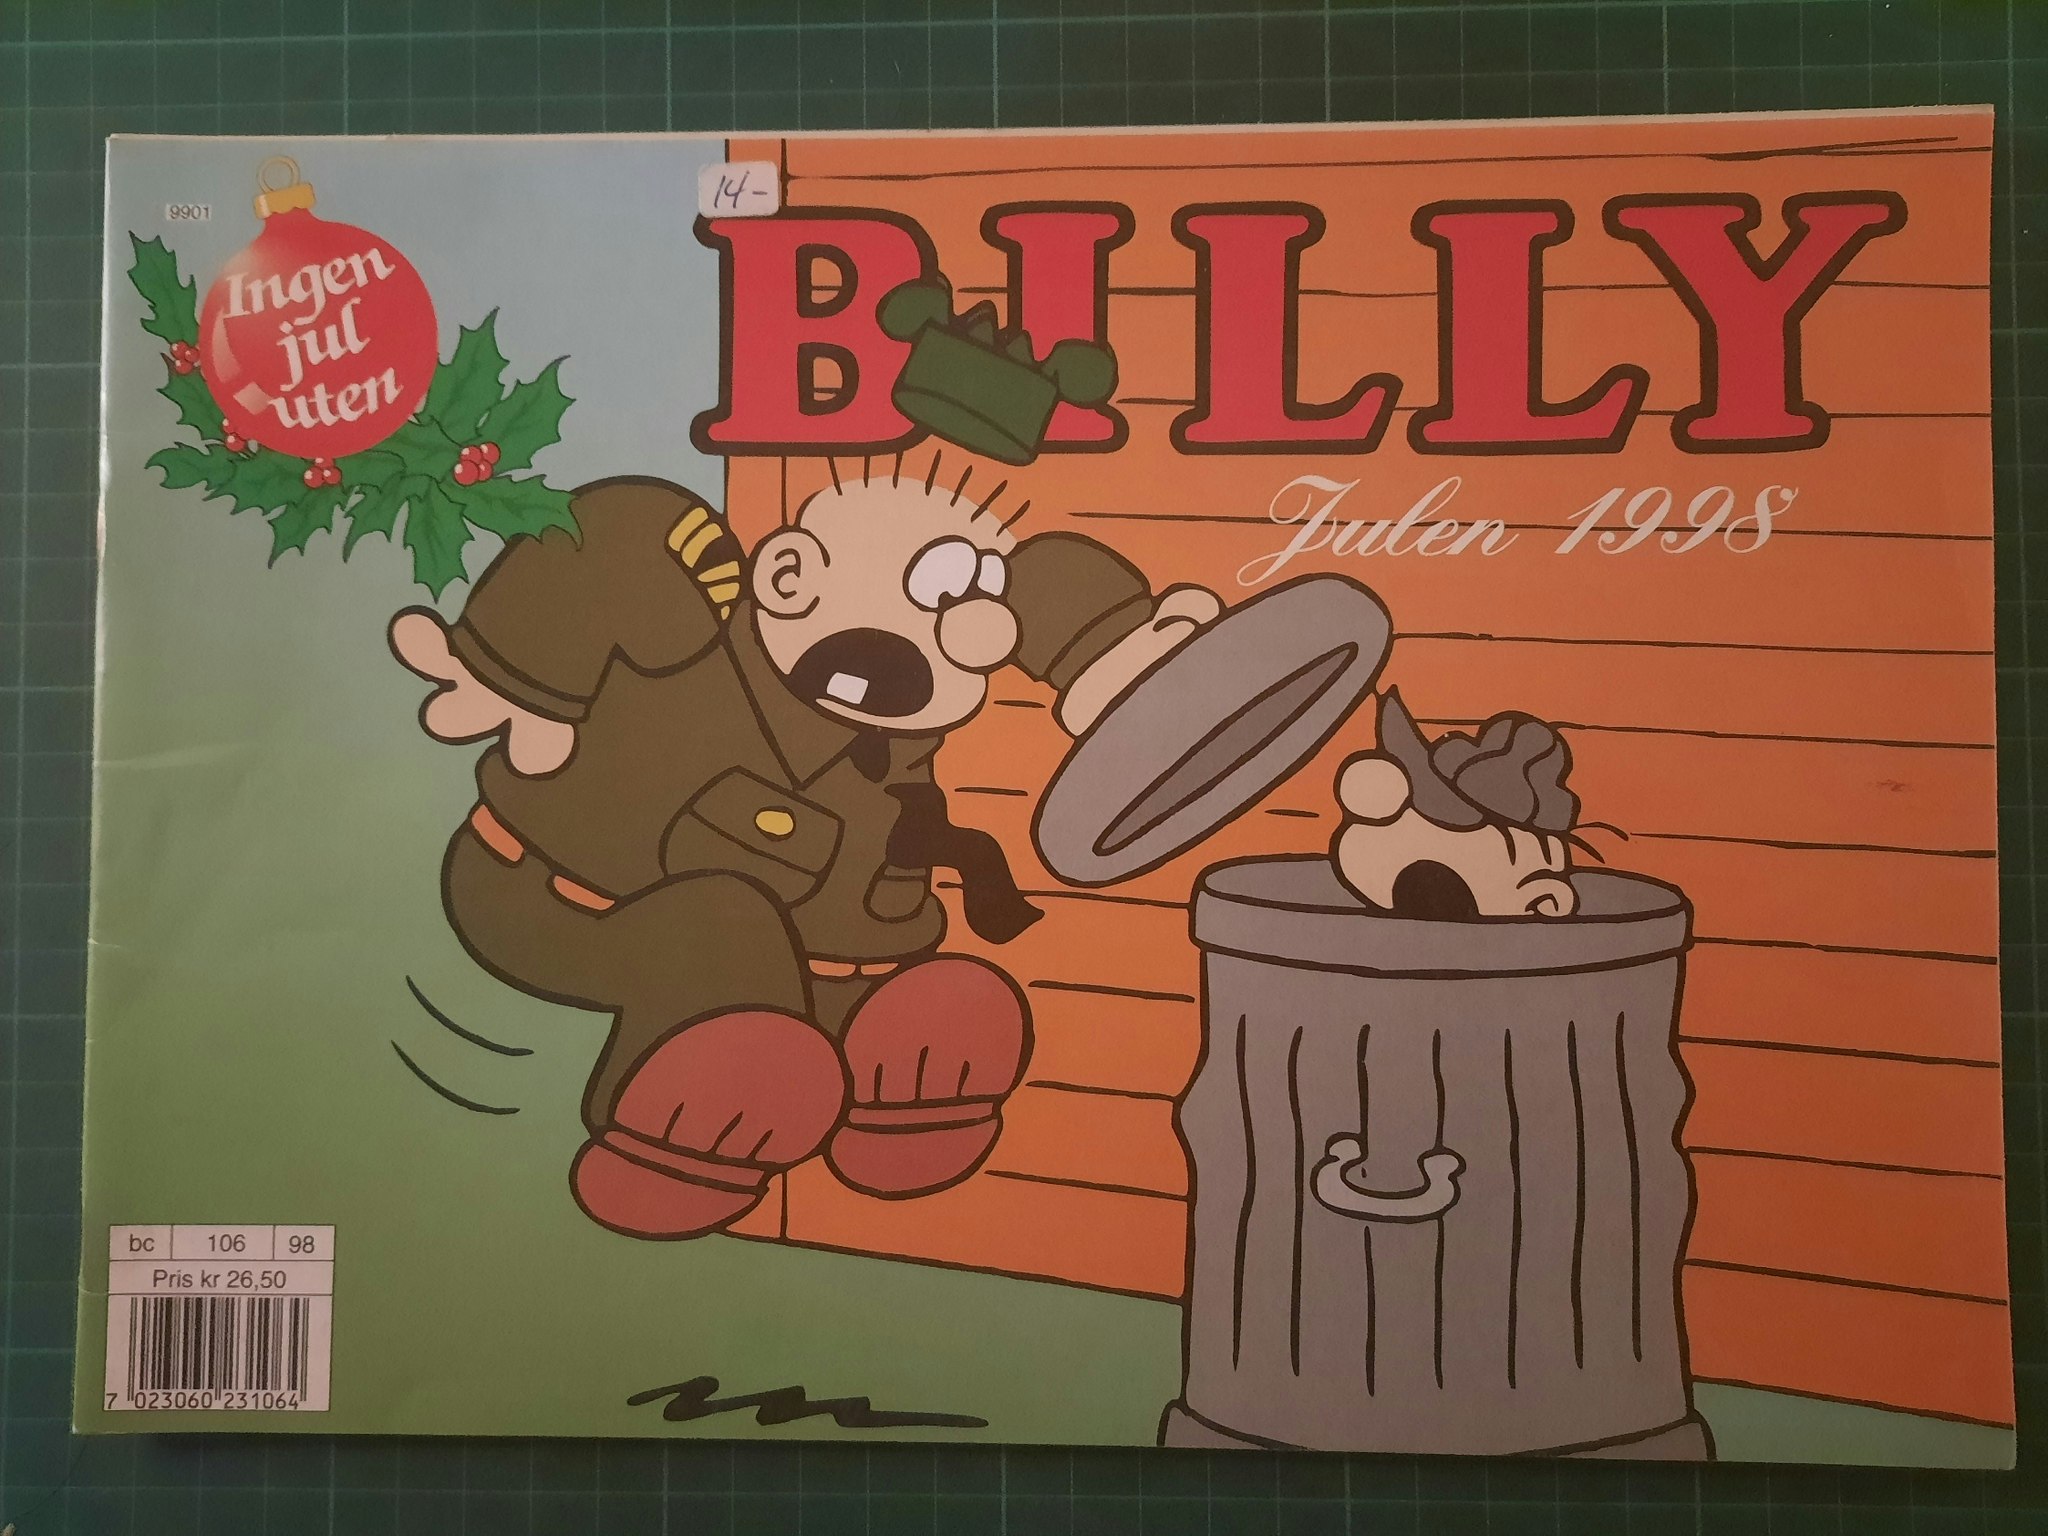 Billy Julen 1998